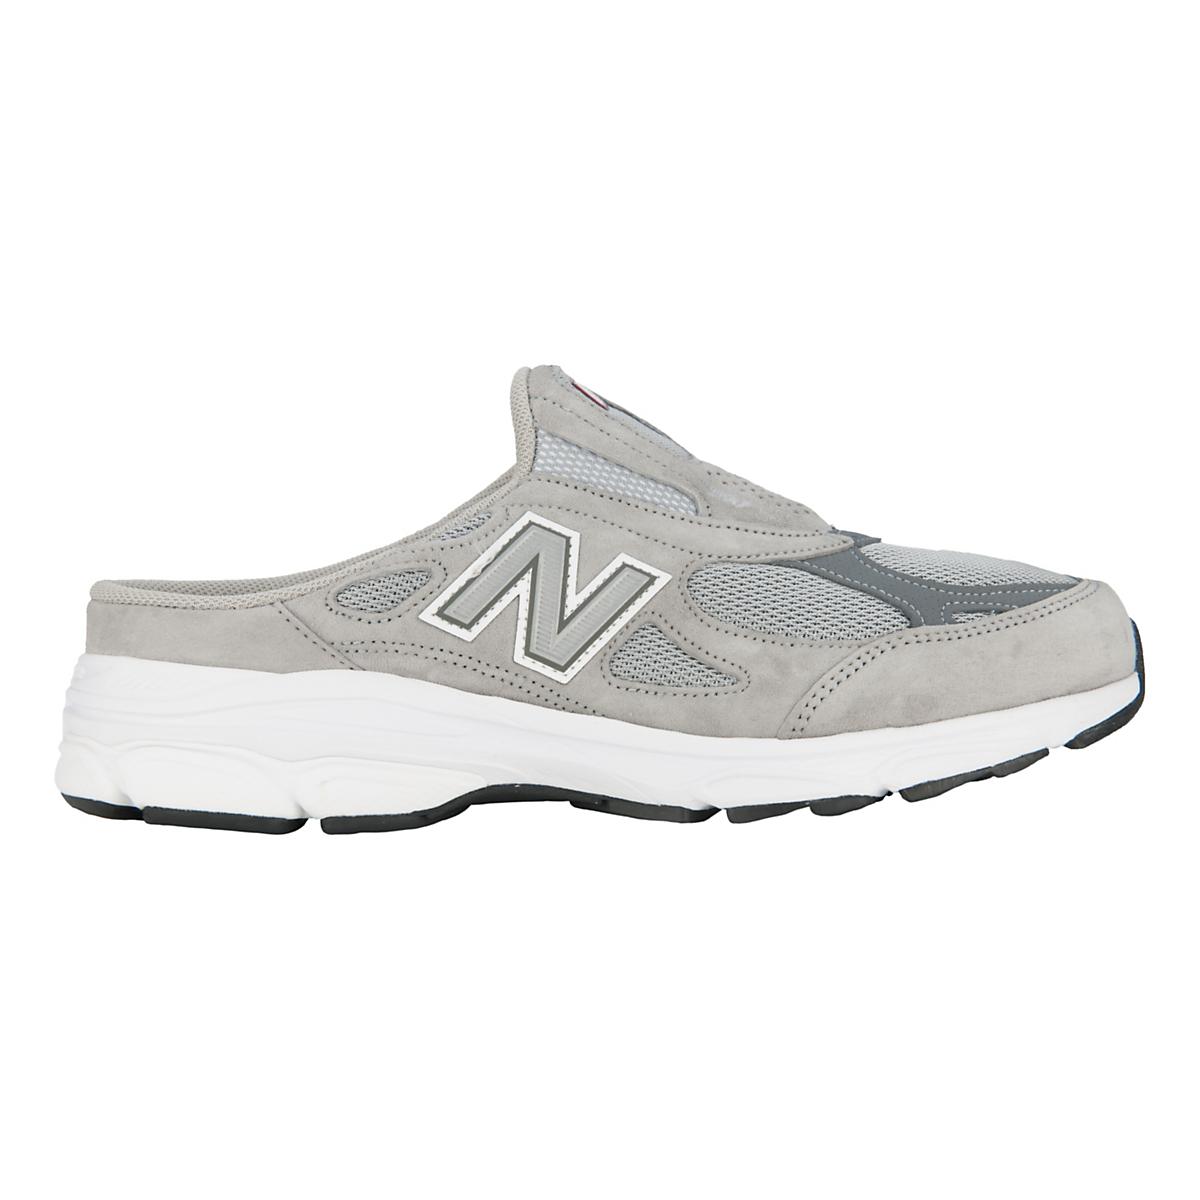 Mens New Balance 990v3 Slip-On Casual Shoe at Road Runner Sports